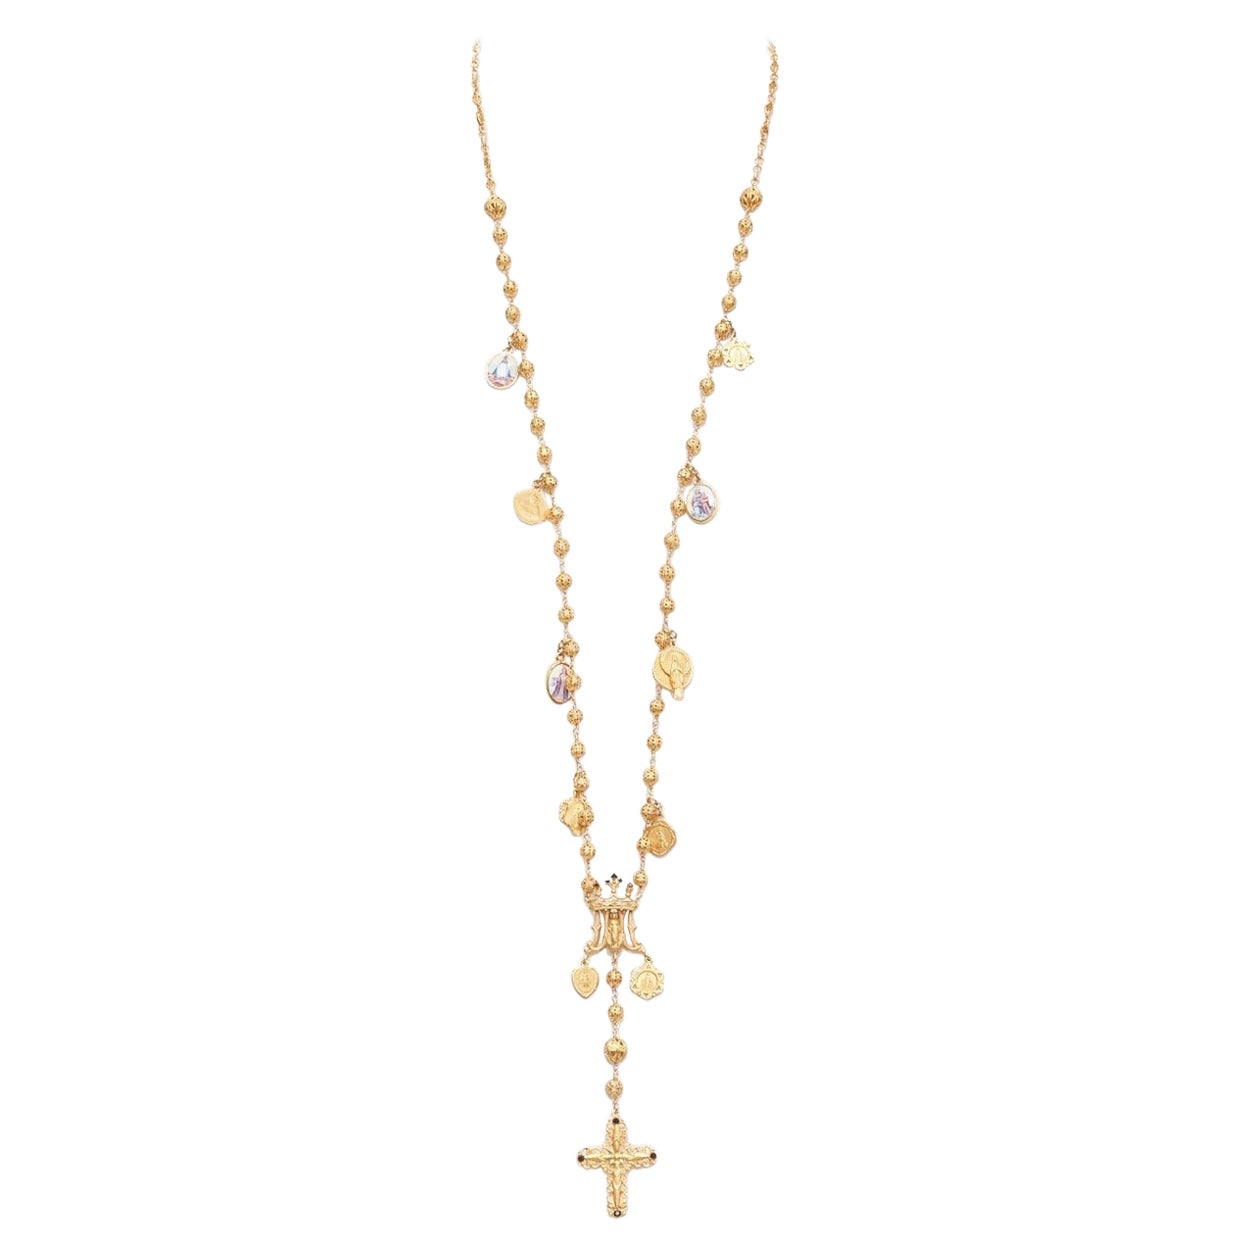 DOLCE GABBANA gold tone Jesus cross Saints coin charm long rosary necklace